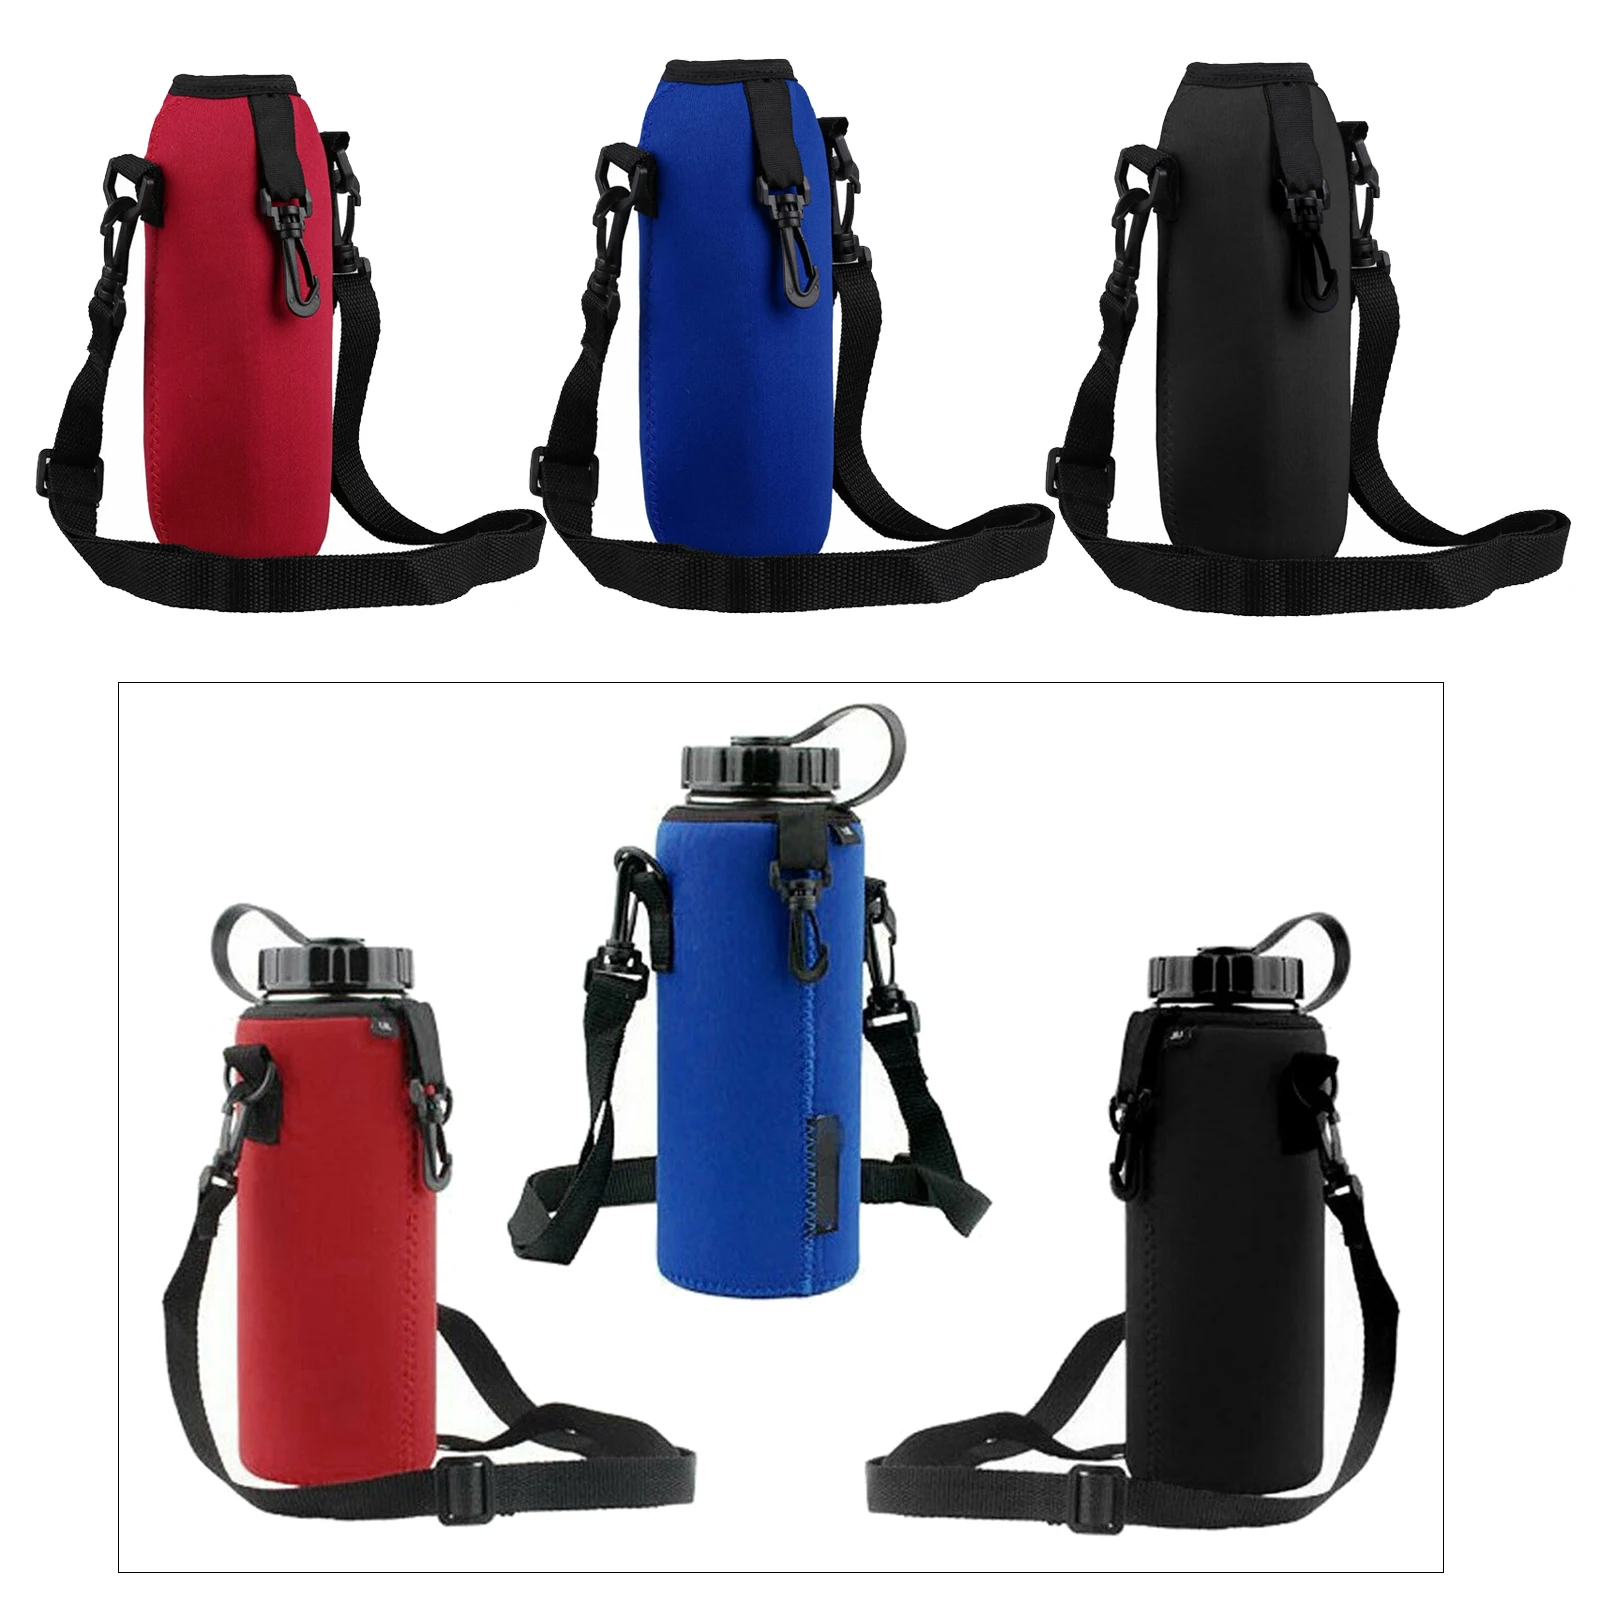 Water Bottle Carrier Insulated Neoprene Water Bottle Holder Bag Pouch Cover750ML